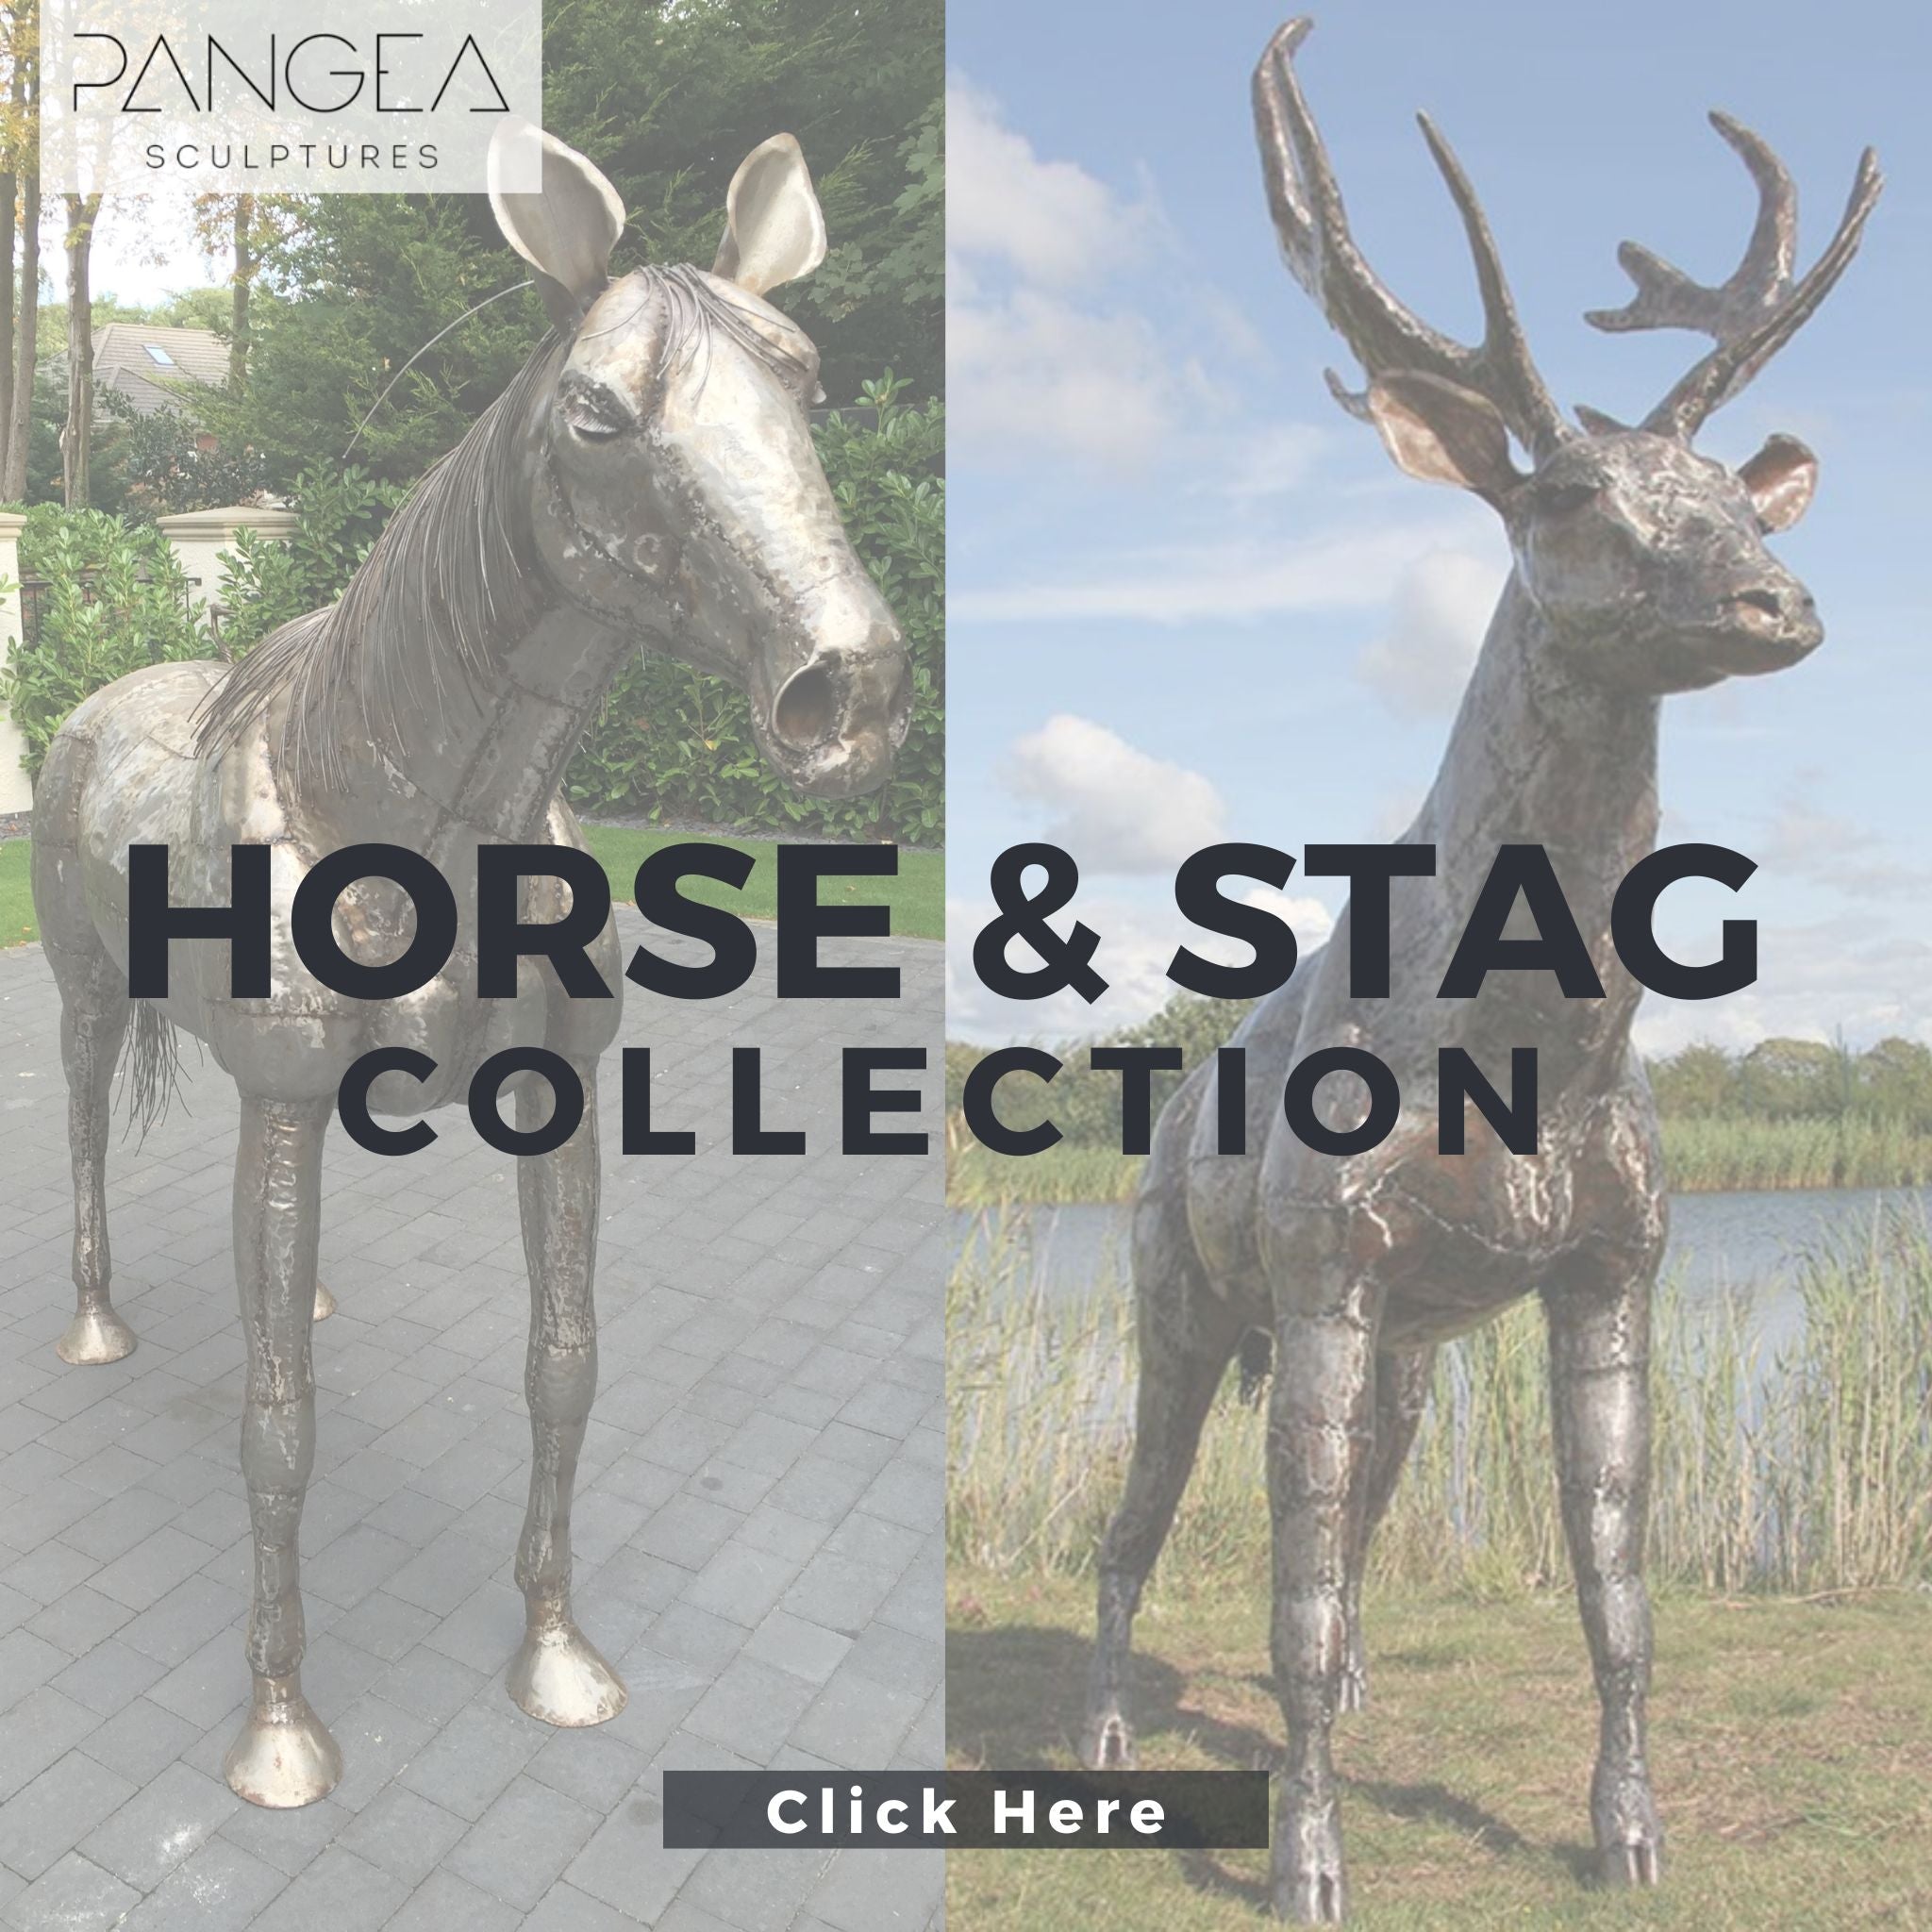 Stag & Horse Sculptures - Pangea Sculptures